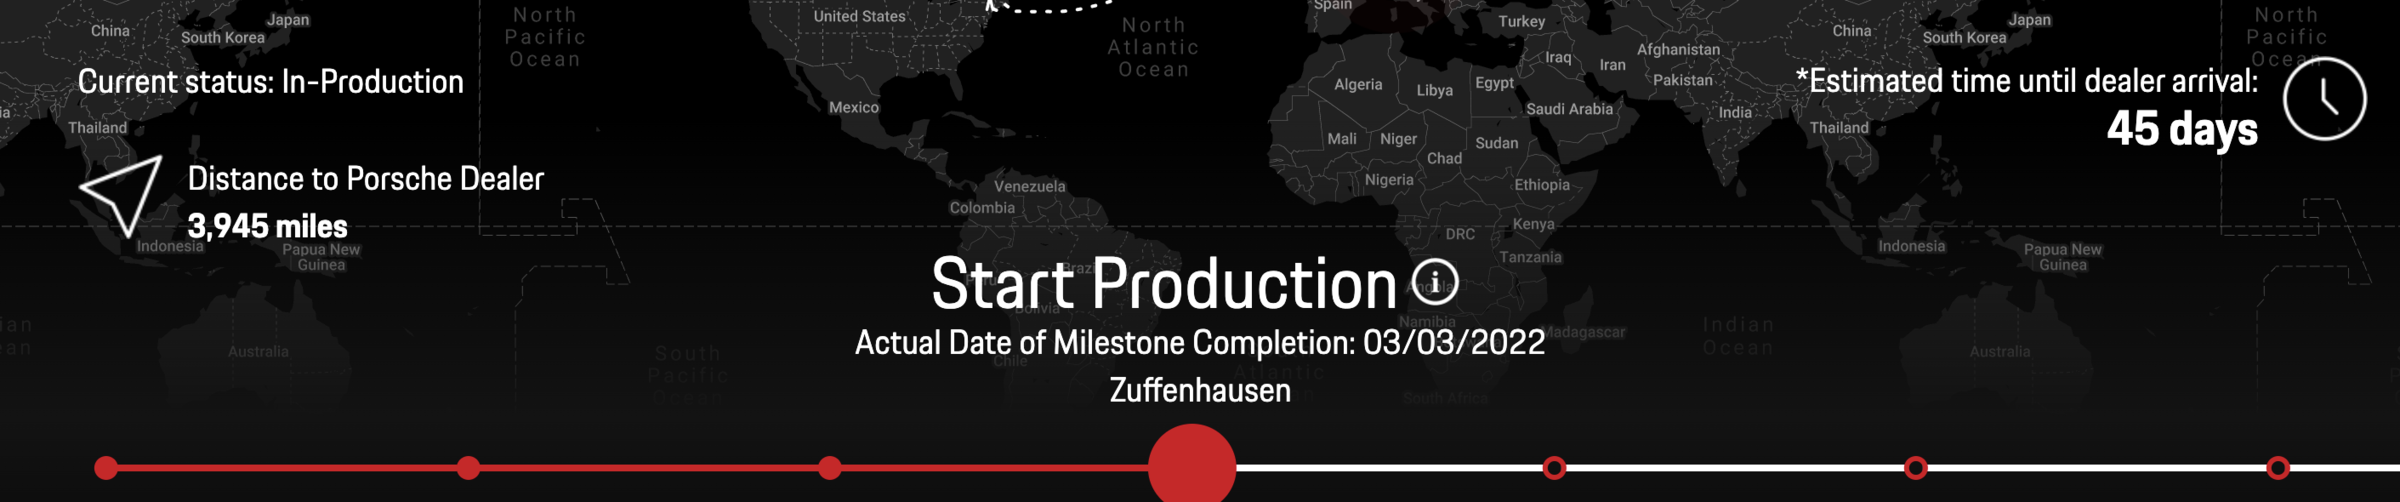 Porsche Taycan Porsche production stopping - March. Screenshot 2022-03-08 at 10.34.56 AM